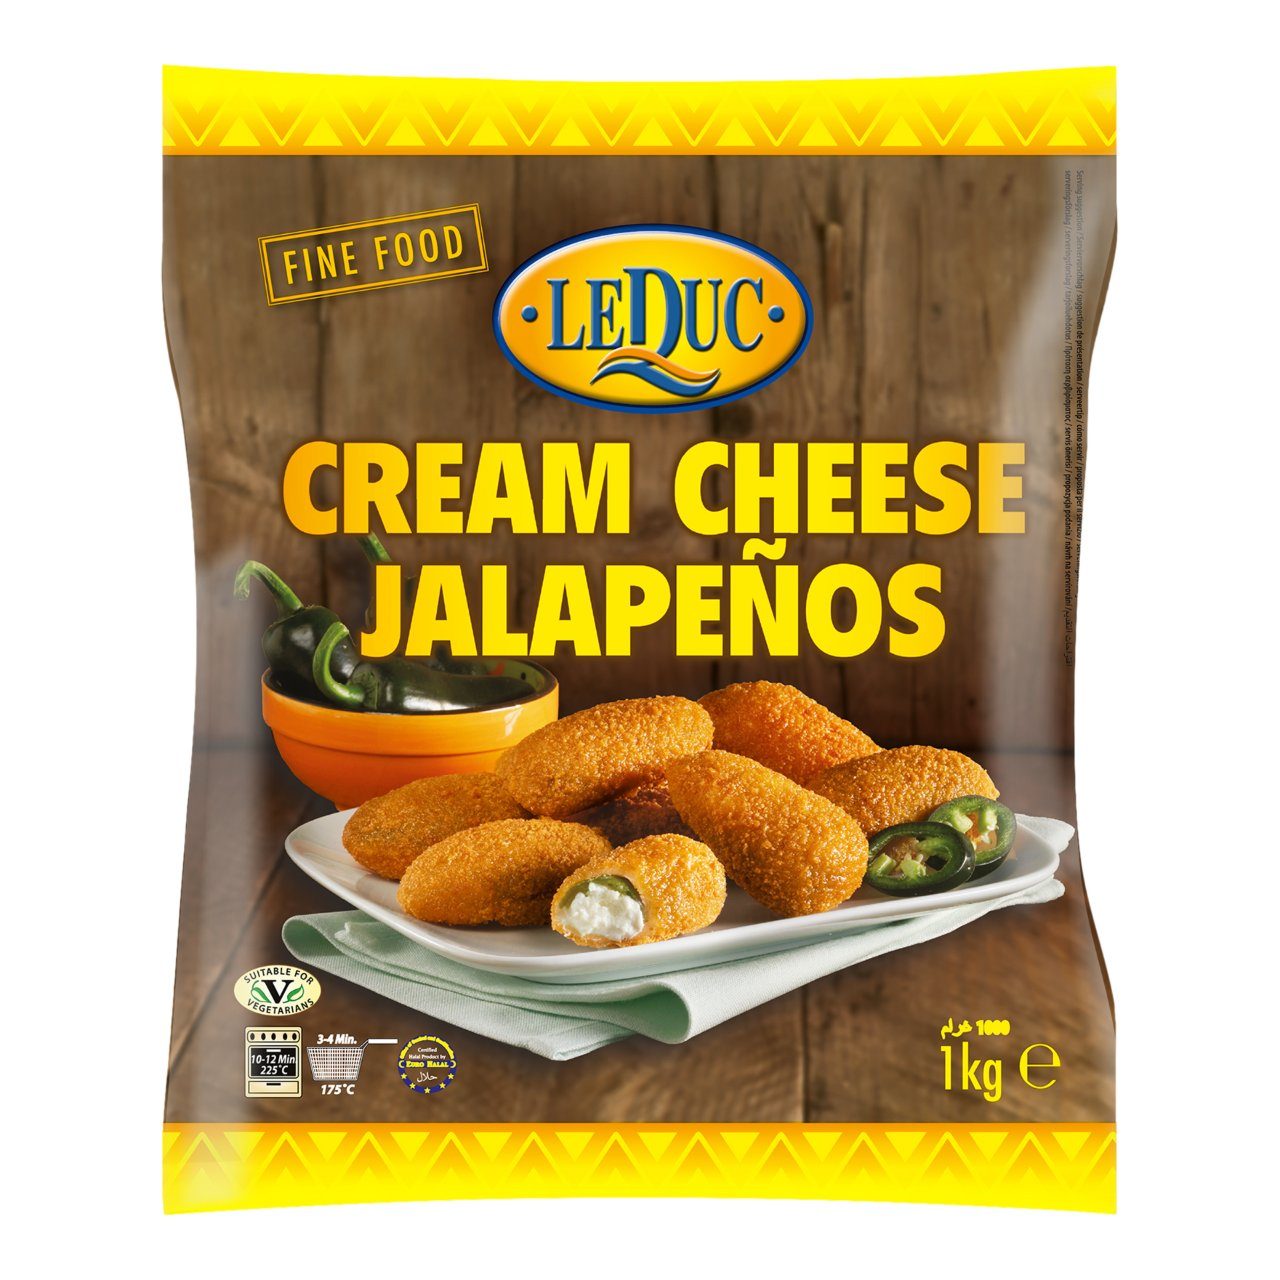 Cream cheese jalapenos